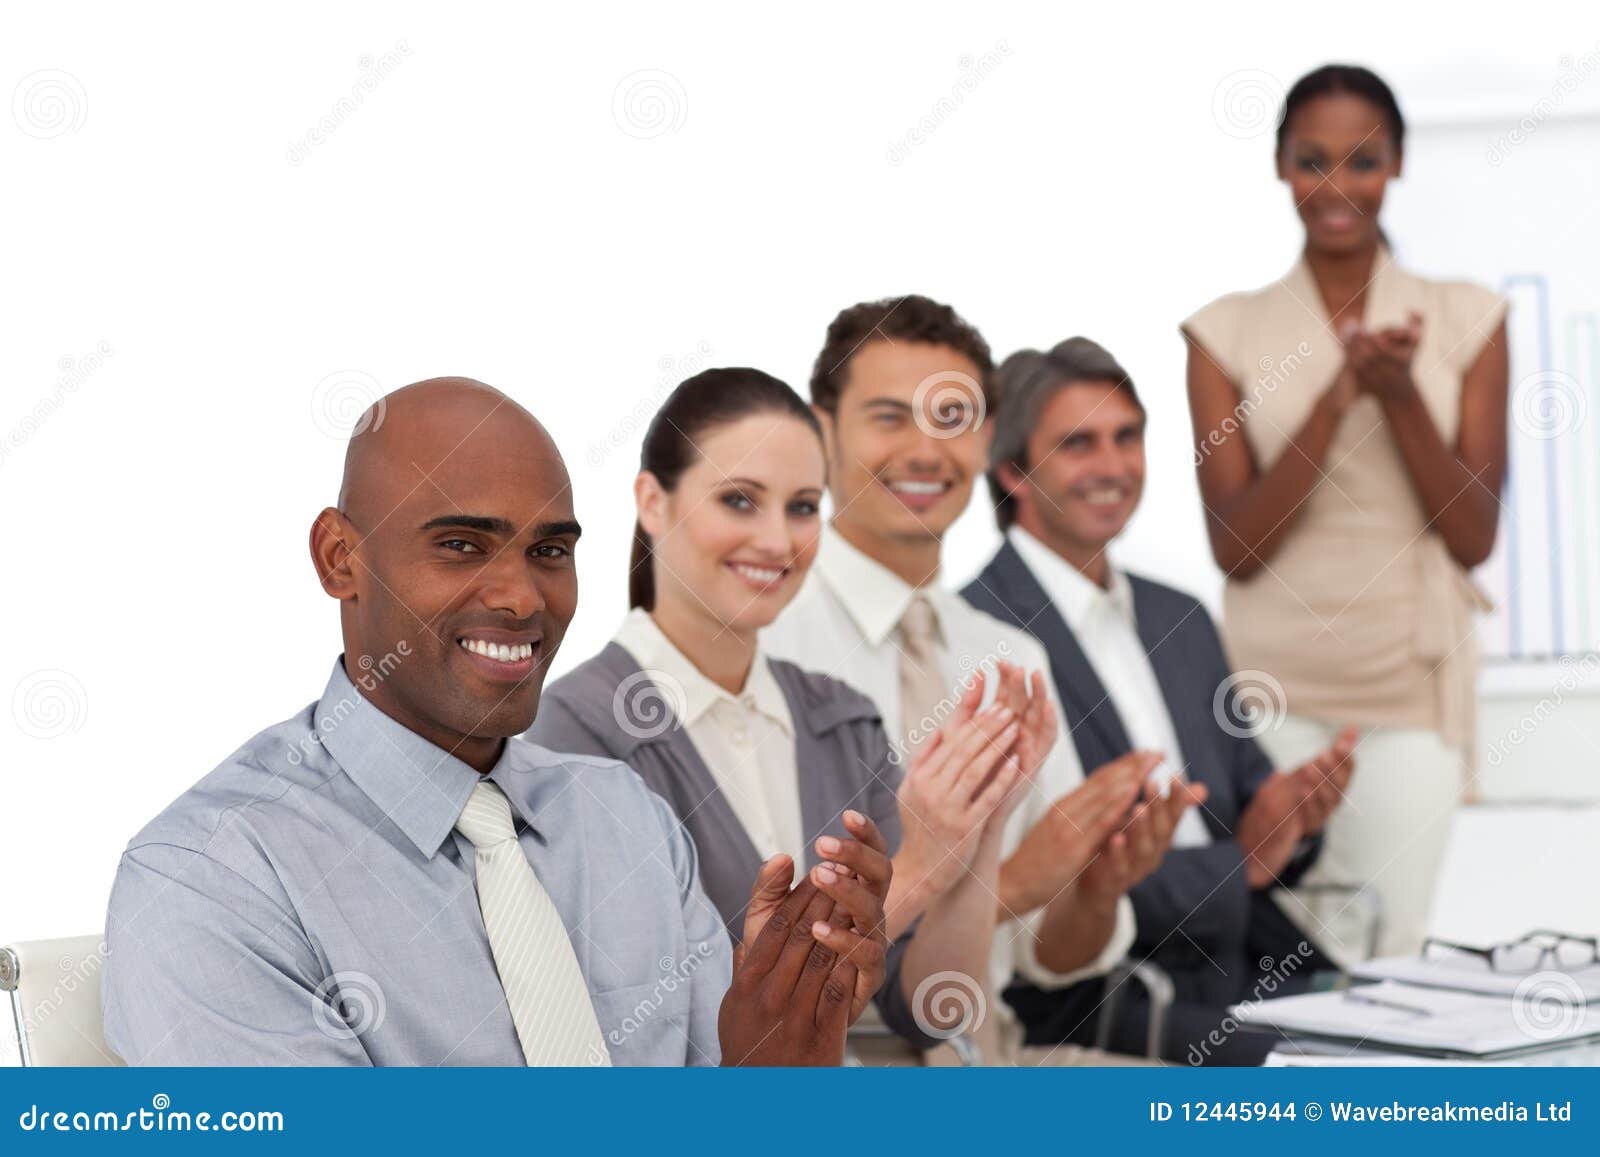 smiling-business-people-applauding-12445944.jpg